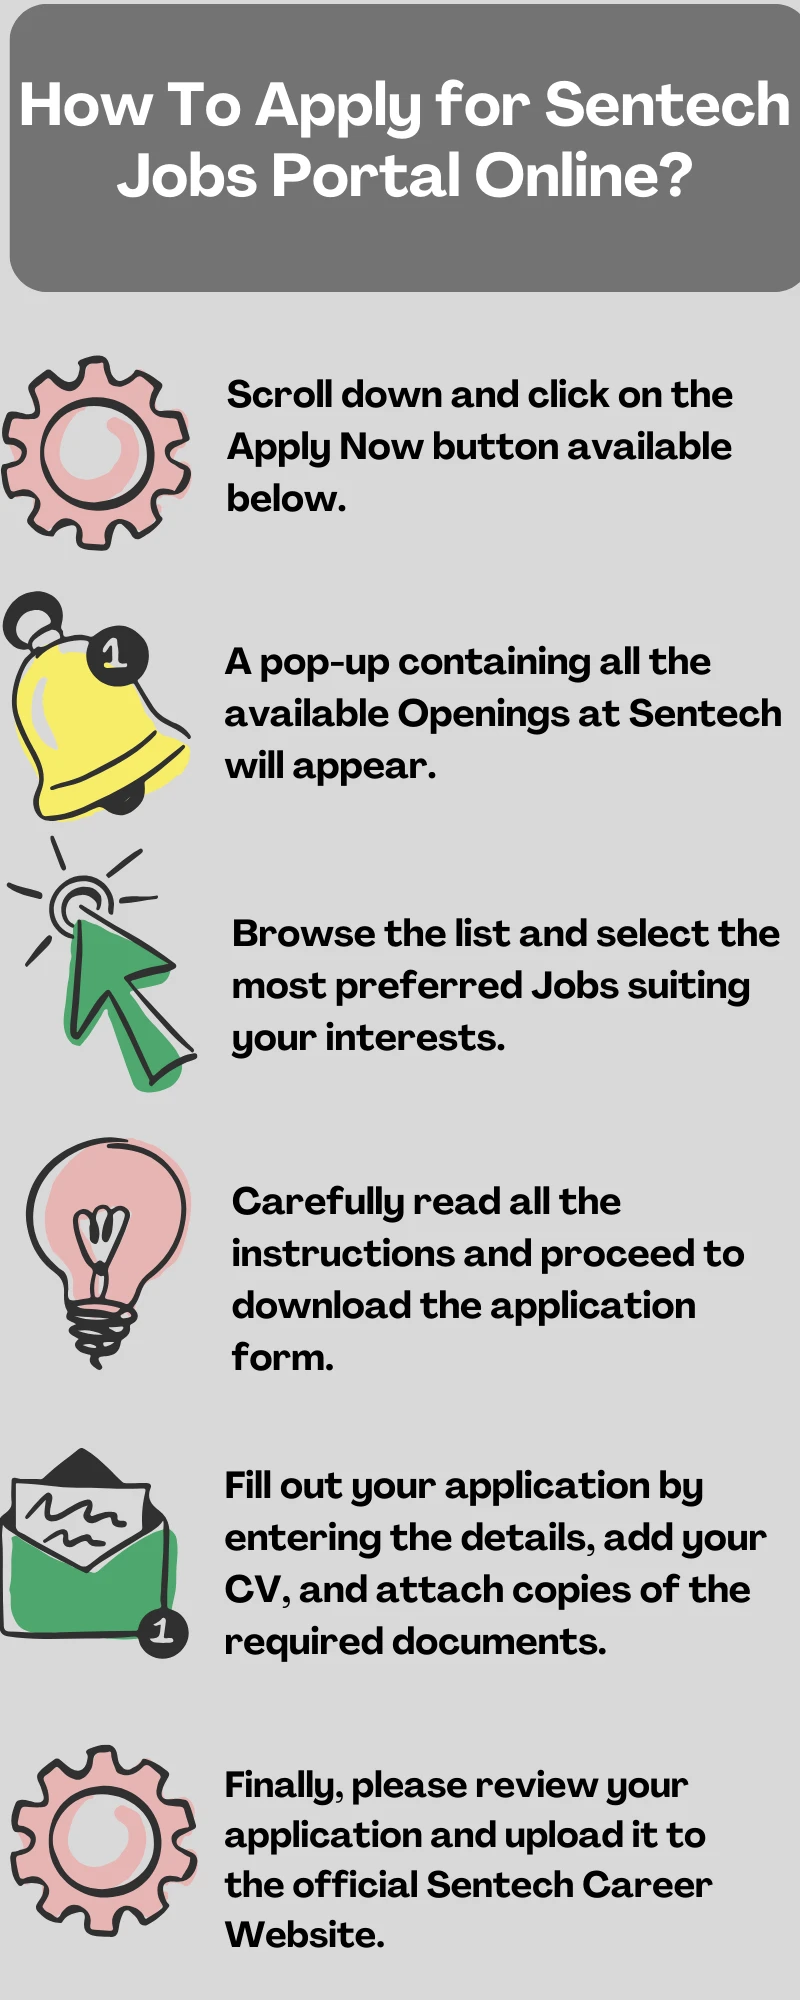 How To Apply for Sentech Jobs Portal Online?